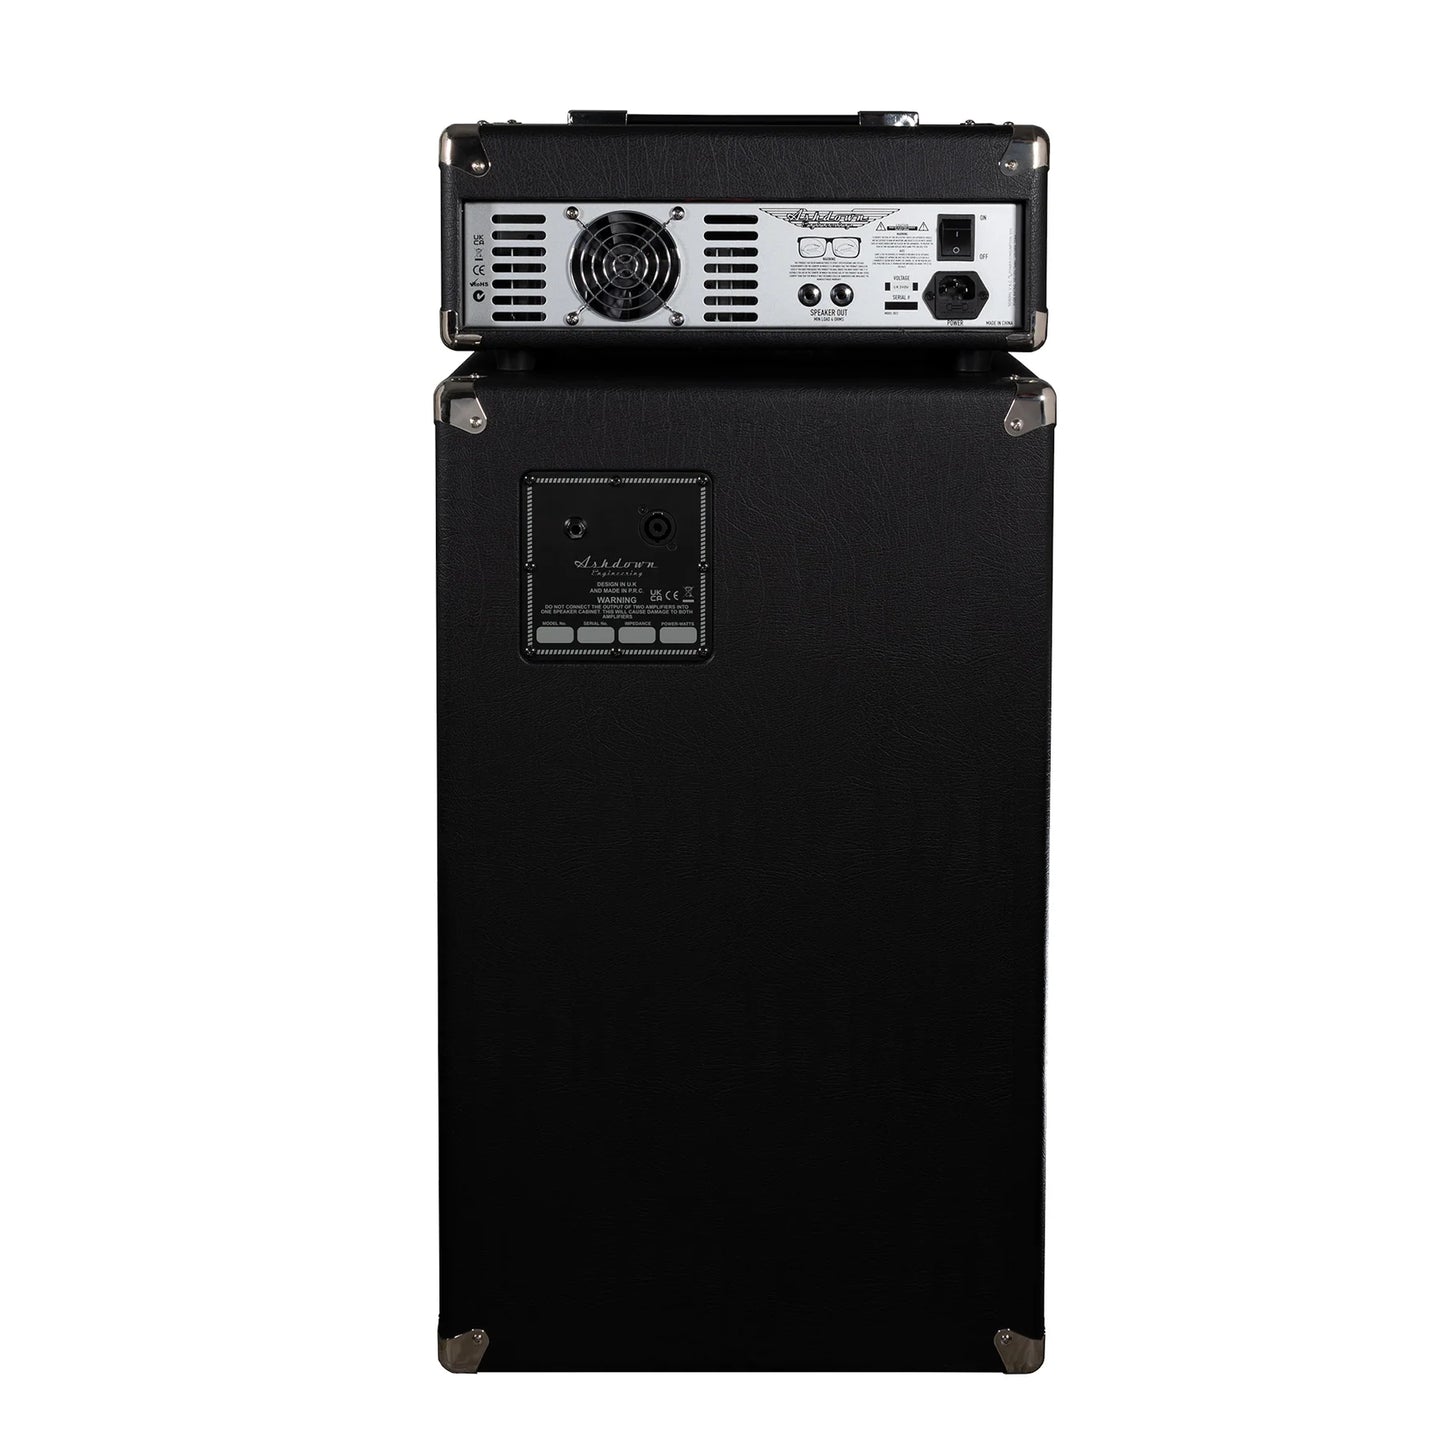 Ashdown Studio MiniRig 2 x 10-inch 250-watt Bass Head and Cabinet